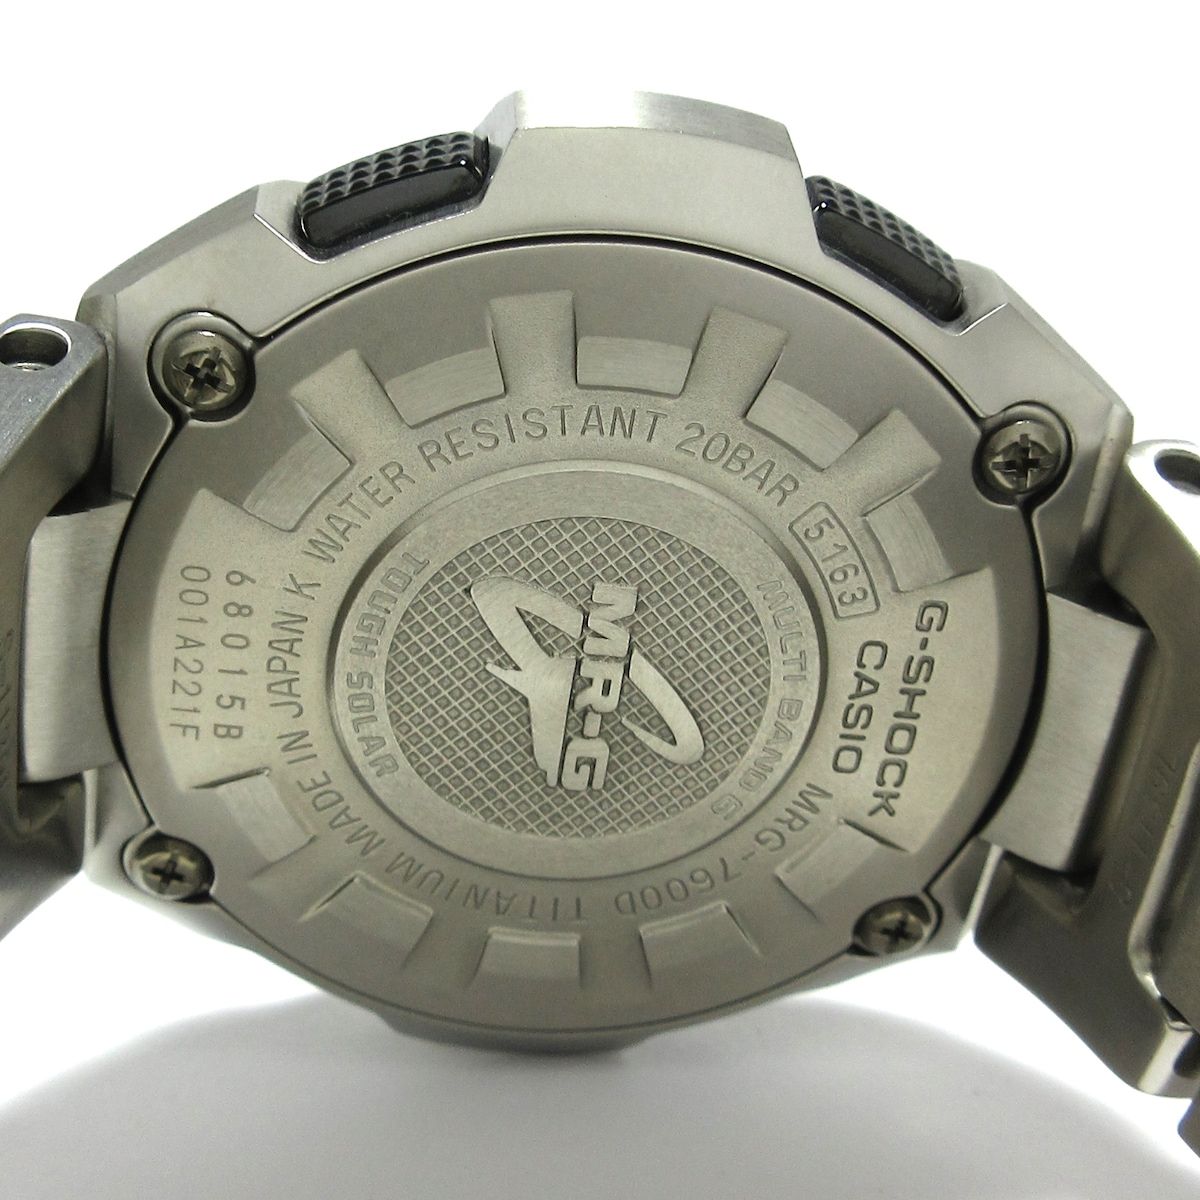 G-SHOCK MR-G 腕時計 チタン グレーMRG-7600D-1BJFよろしくお願いいたします